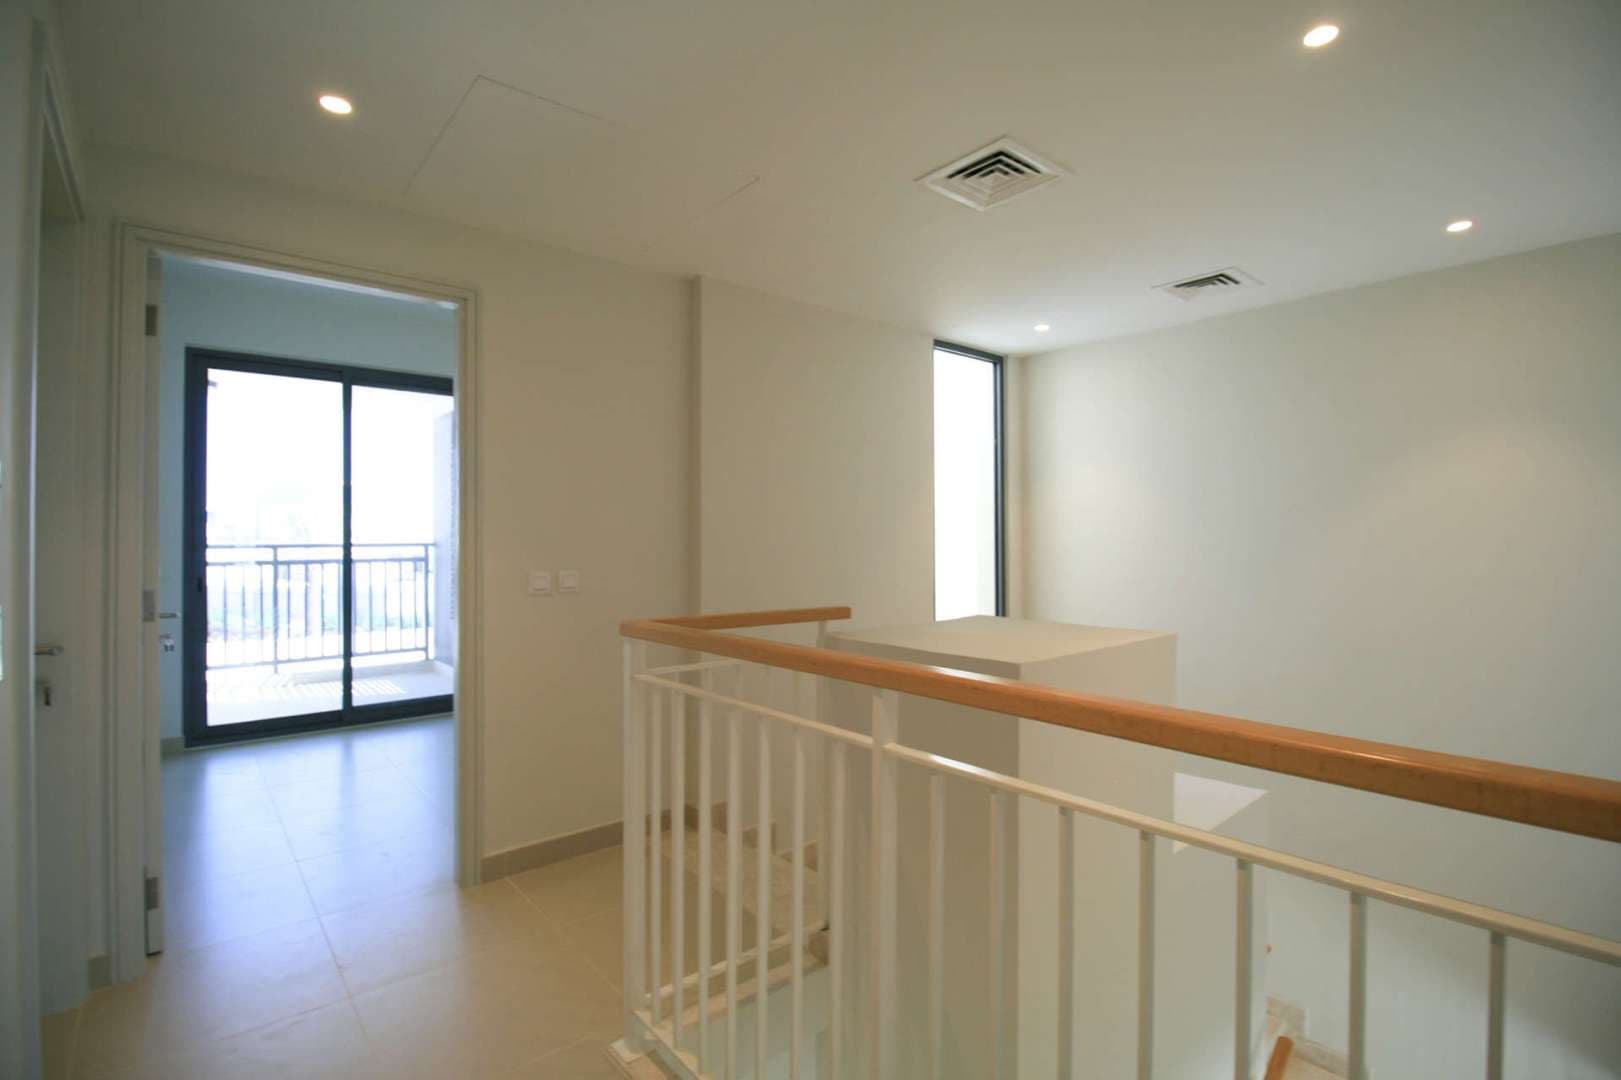 5 Bedroom Townhouse For Sale Maple At Dubai Hills Estate Lp07024 1640b7267b802300.jpg